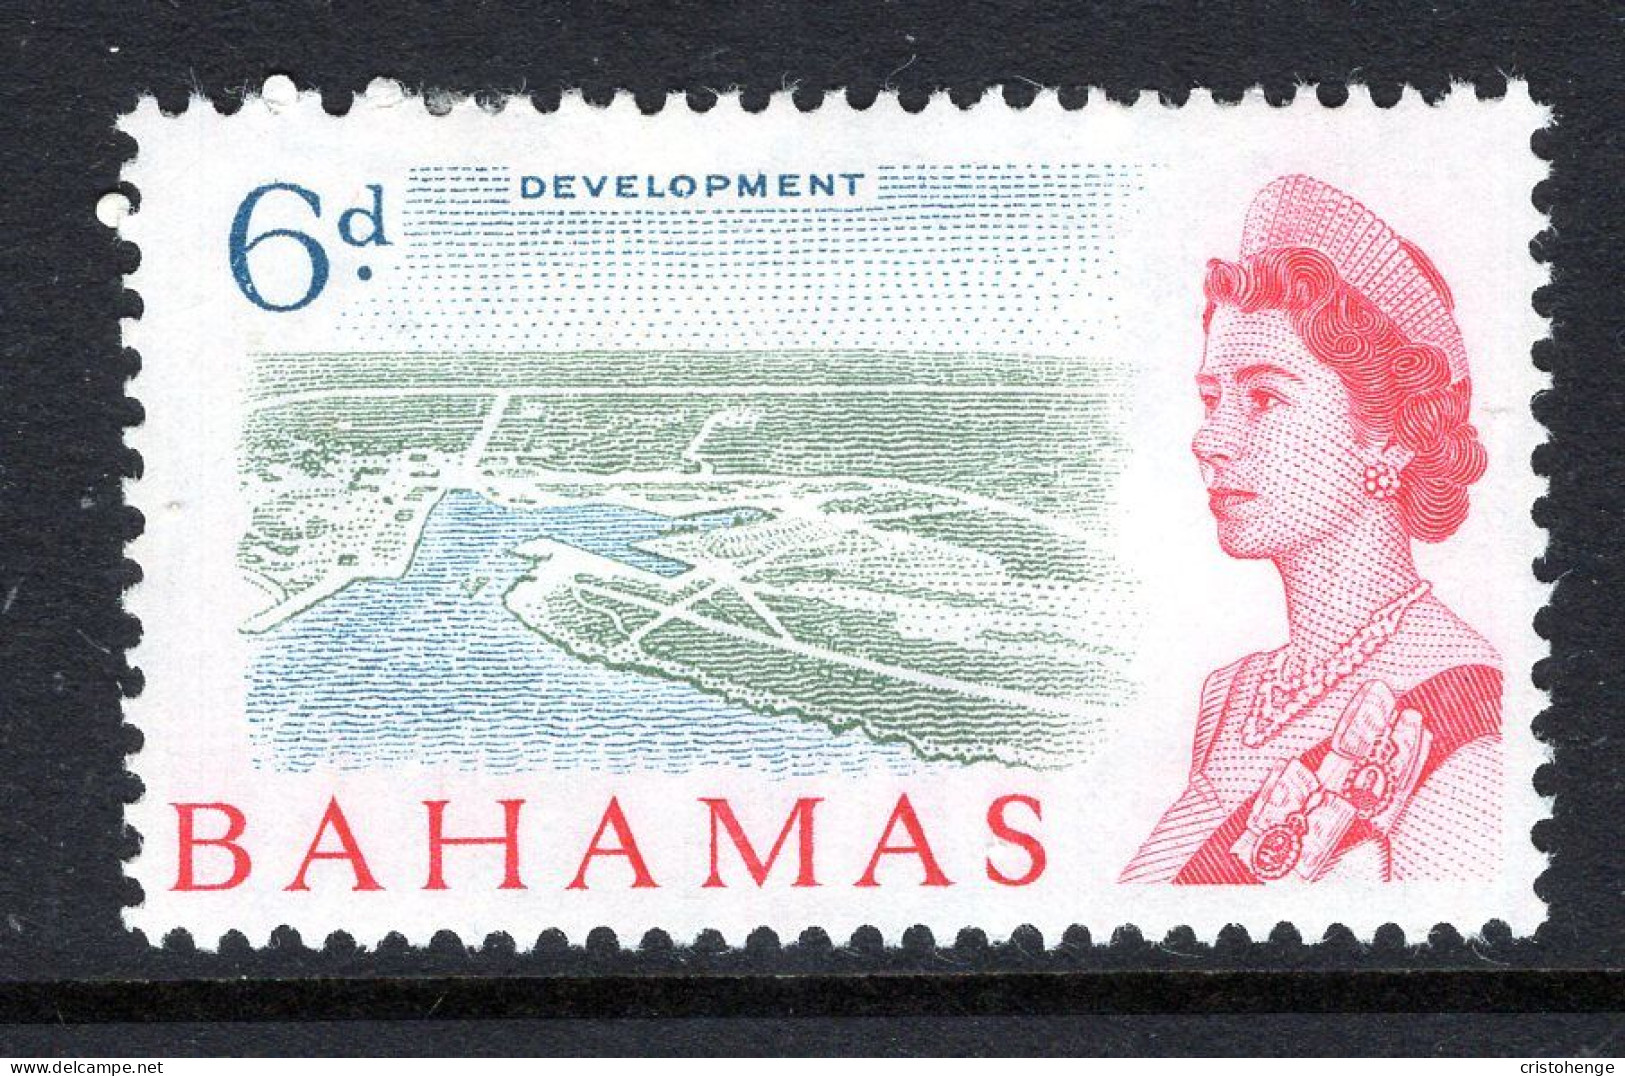 Bahamas 1965 Pictorials - 6d Development HM (SG 253) - 1963-1973 Ministerial Government